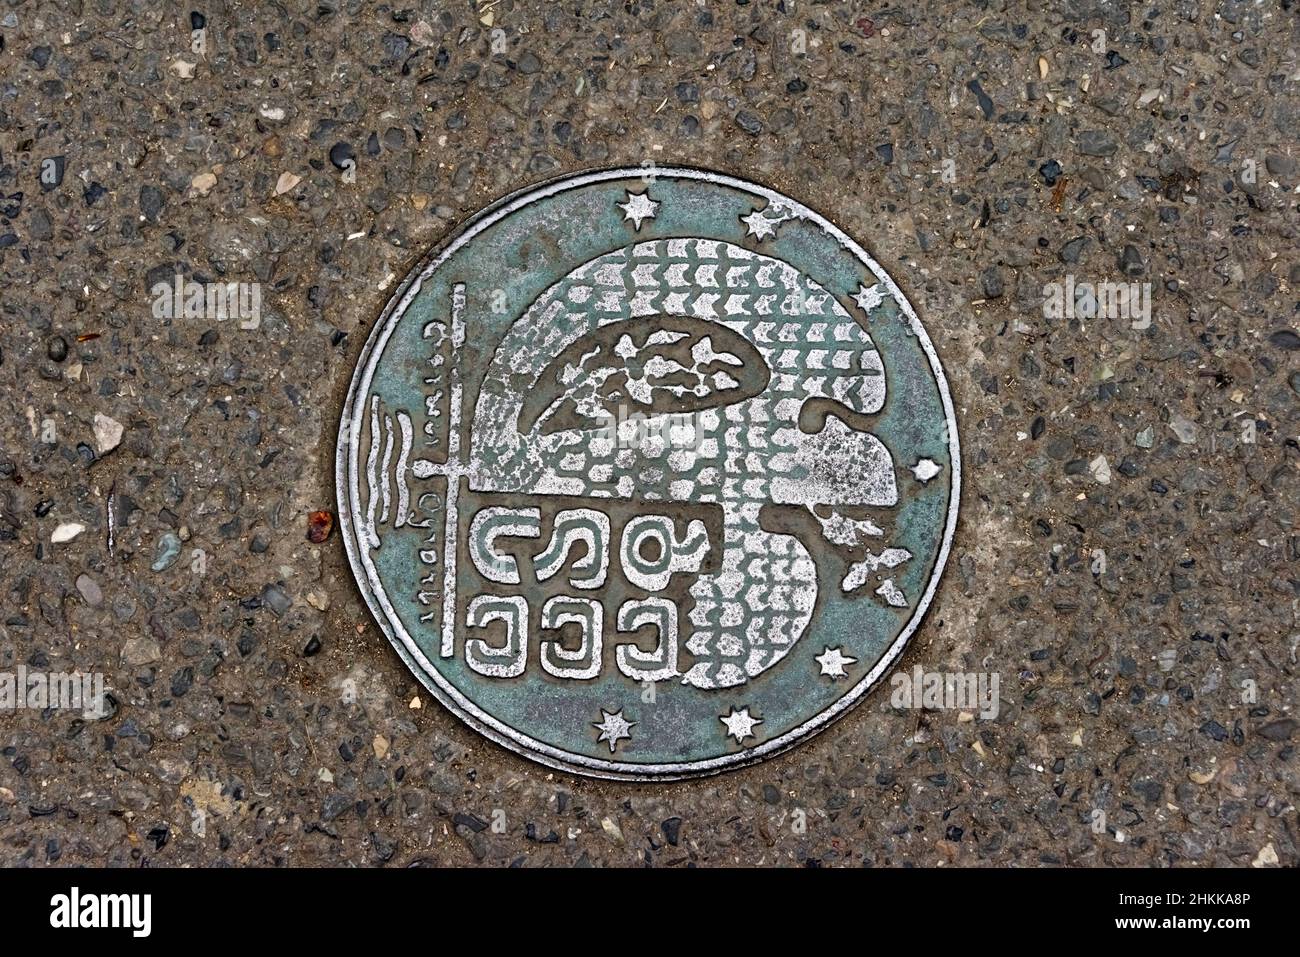 Decorated sewer cover, Tbilisi, Georgia Stock Photo